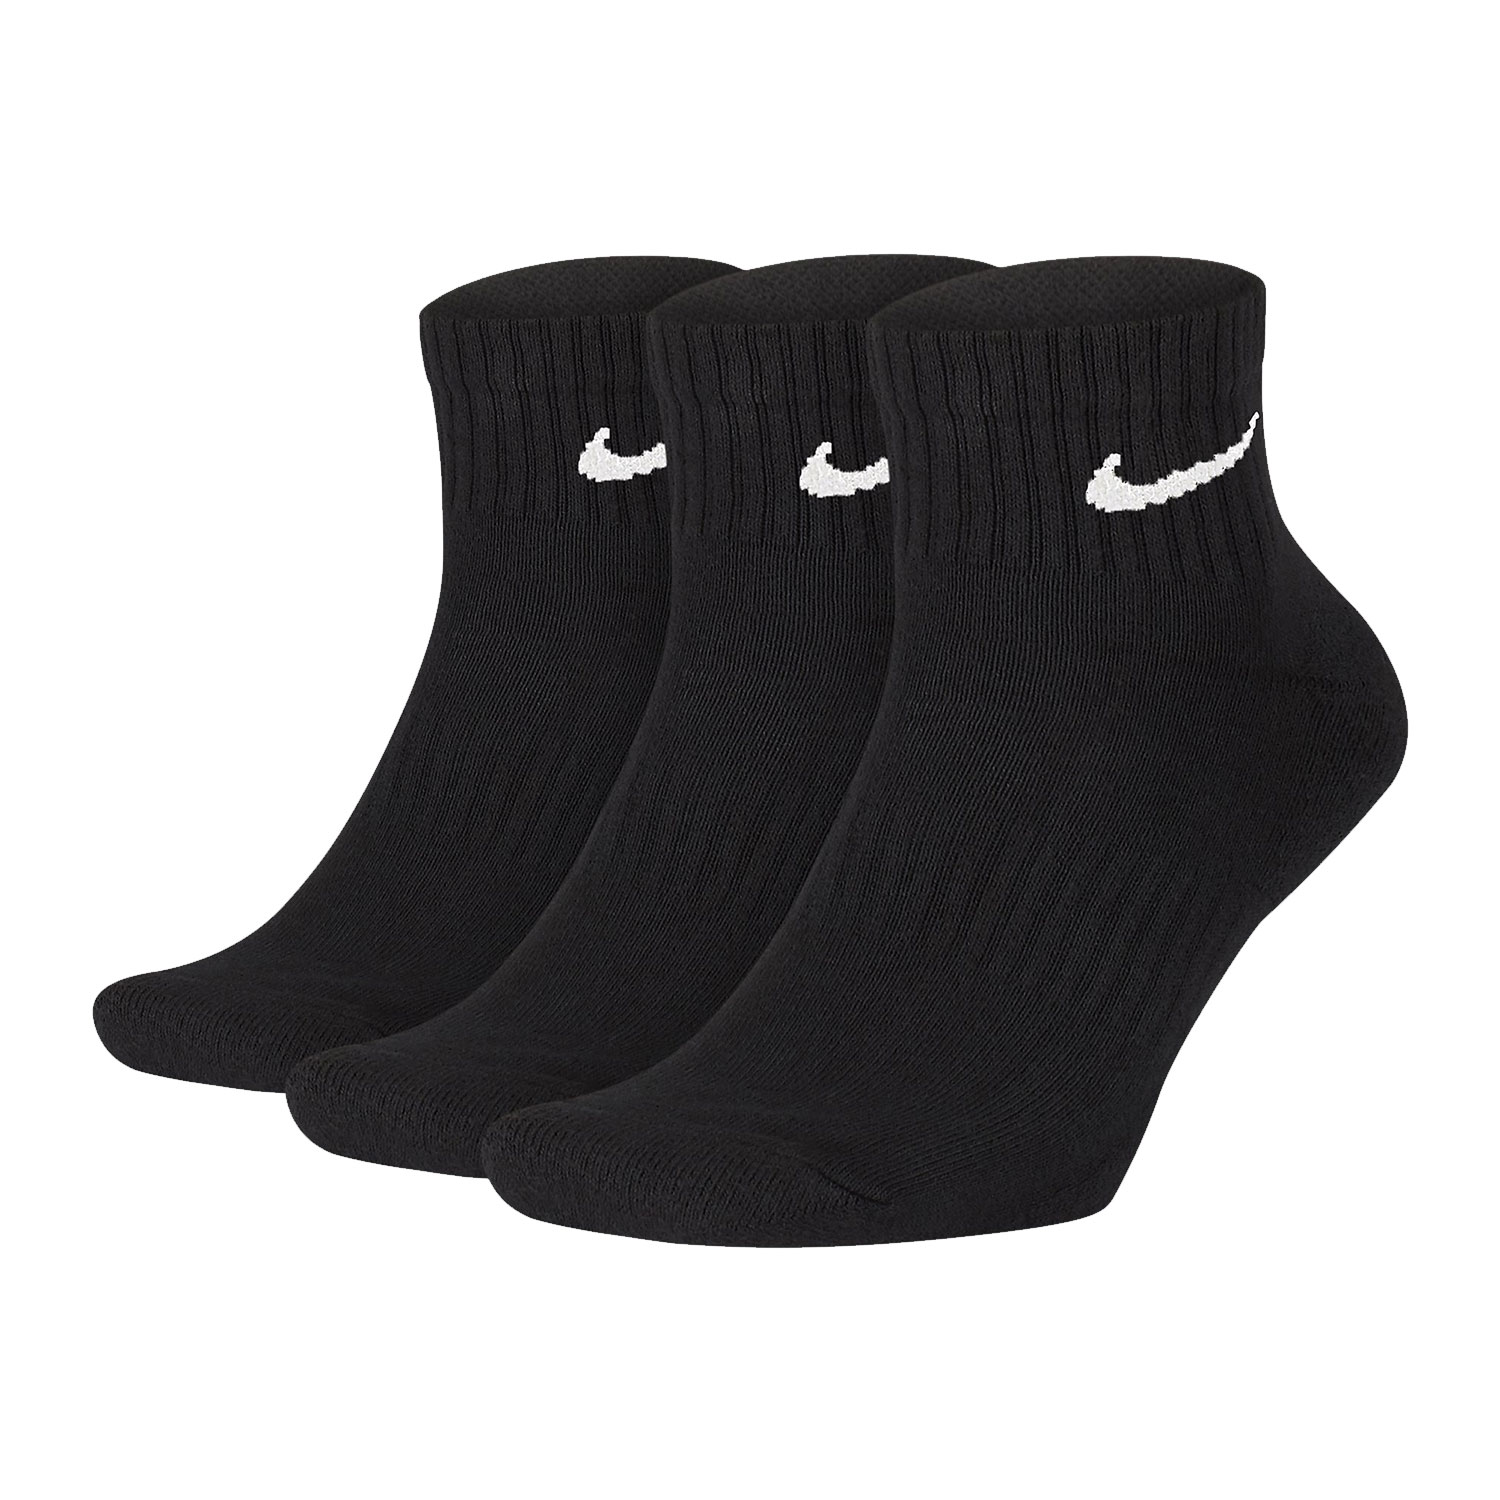 Nike Everyday Cushion x 3 Calcetines - Black